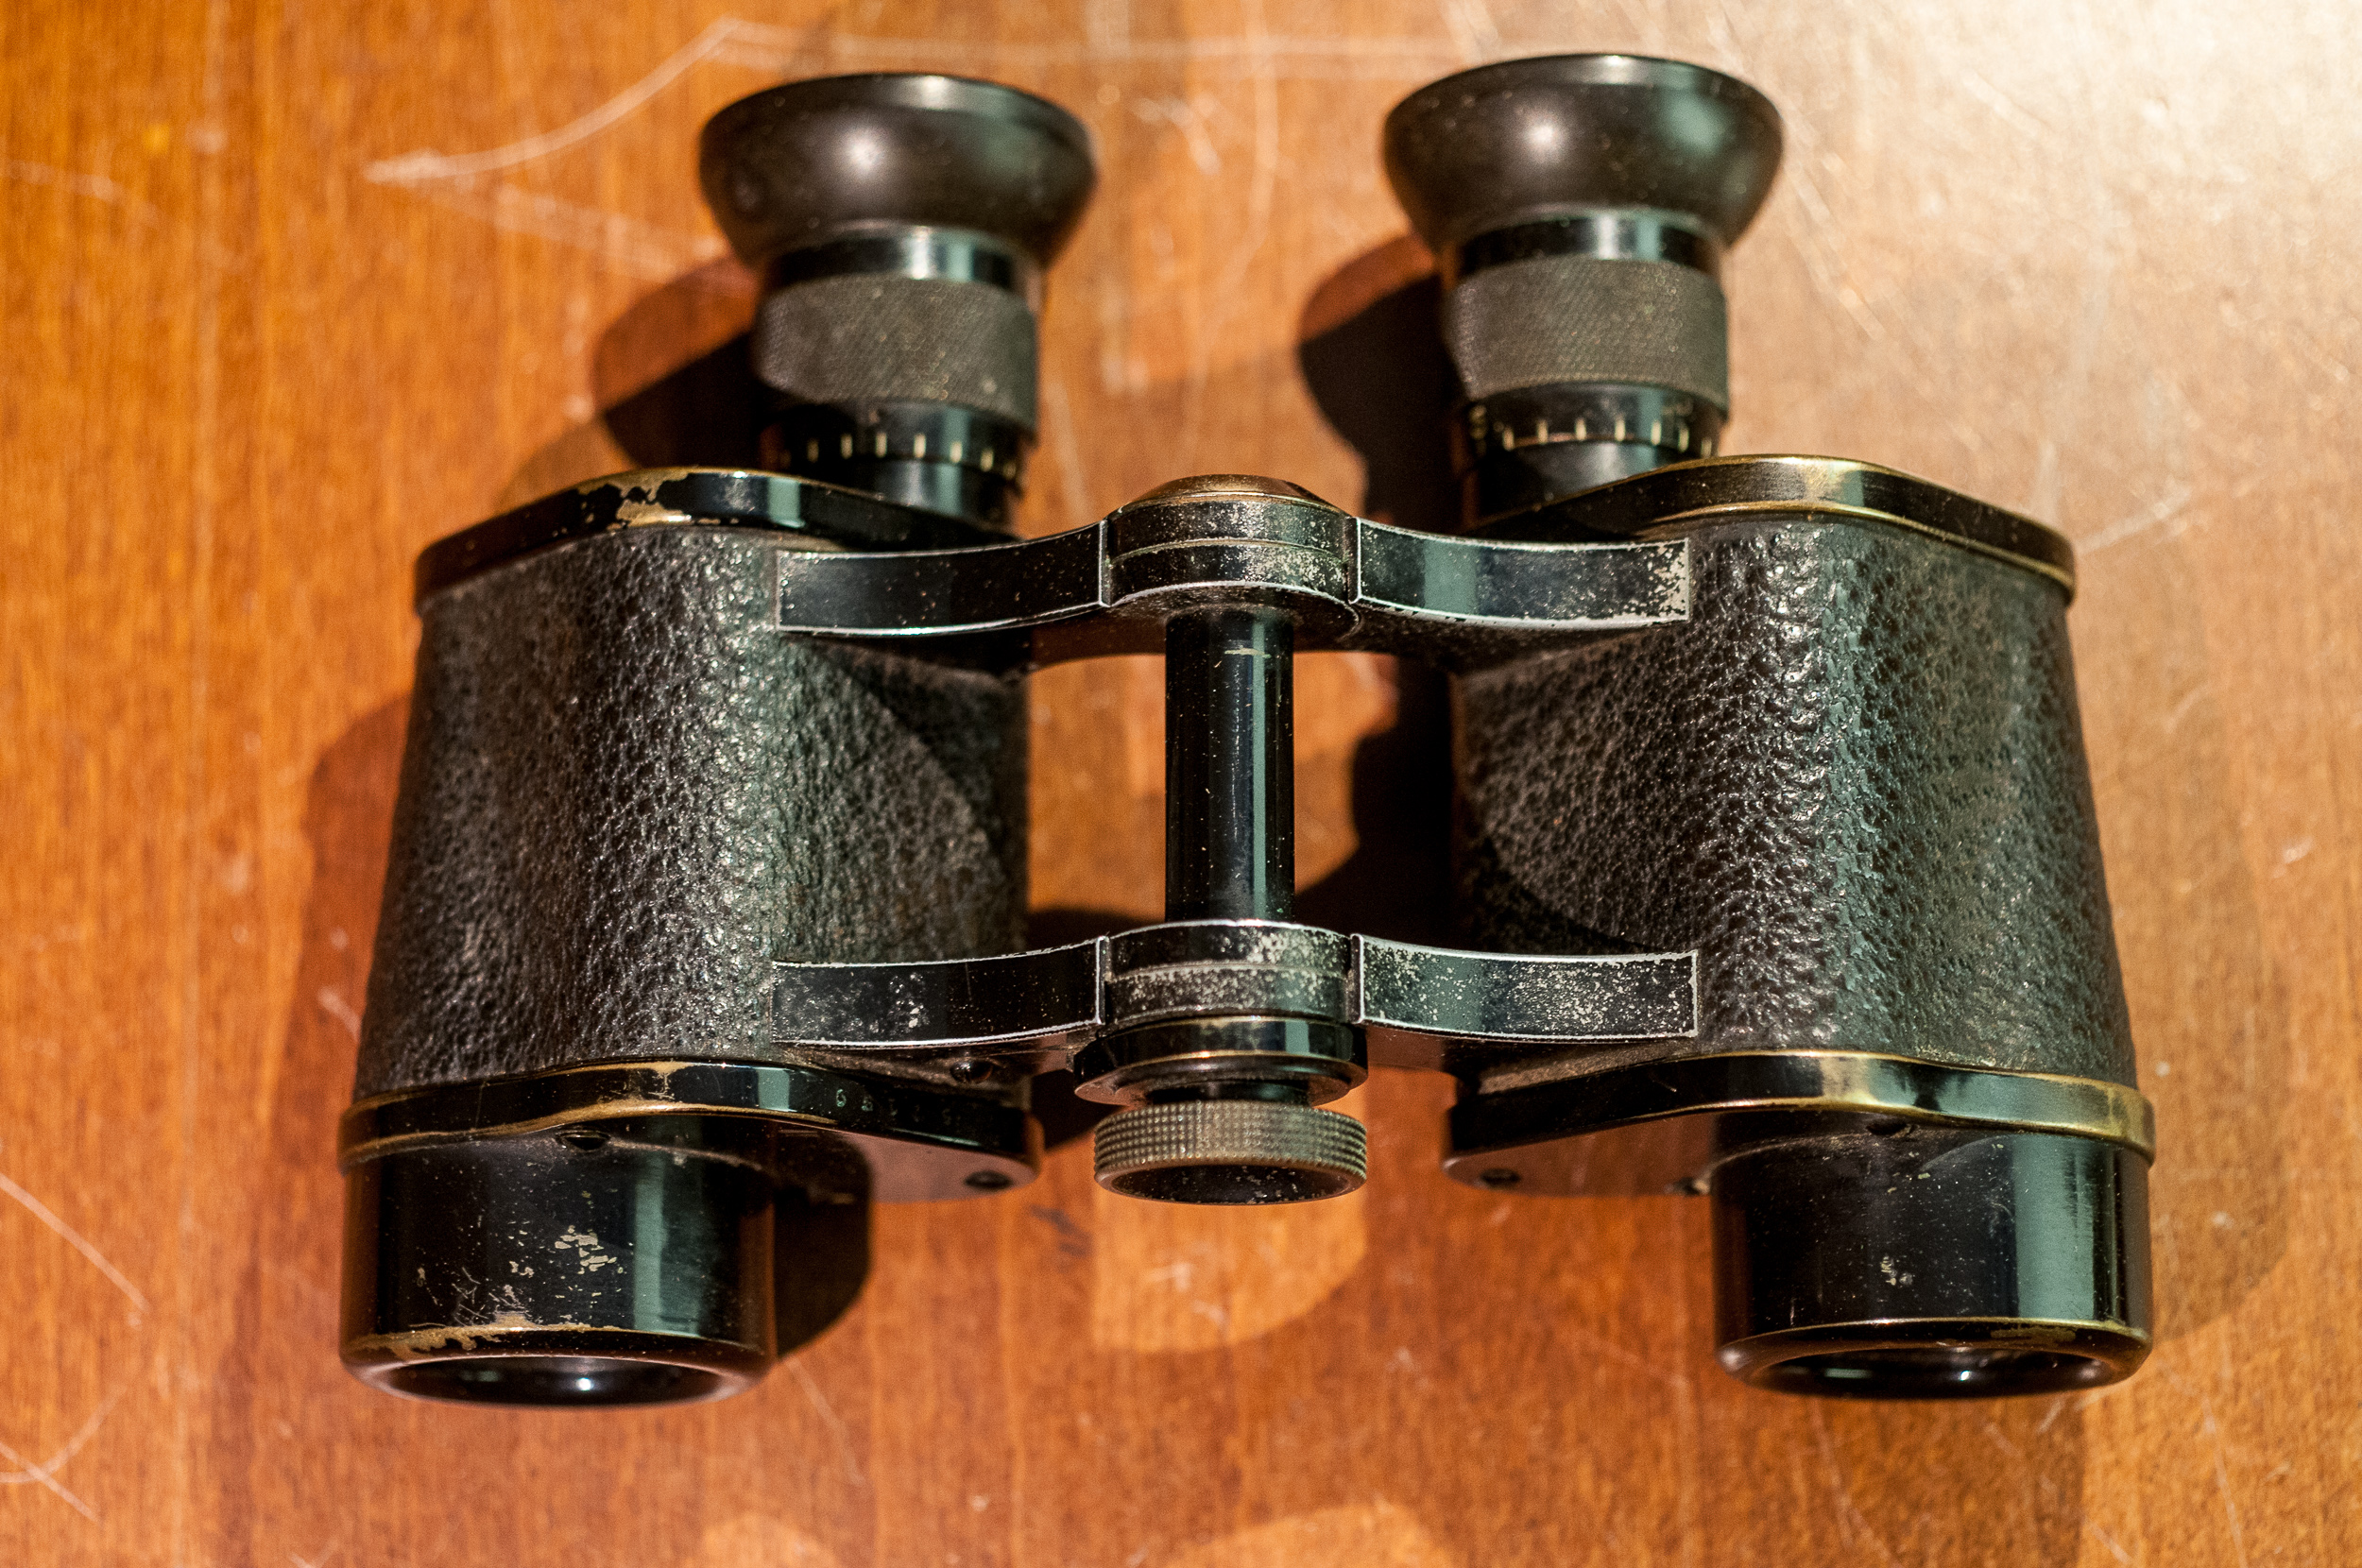 CARL ZEISS Jena Marineglas 6 X German Binoculars with leather case 522978 